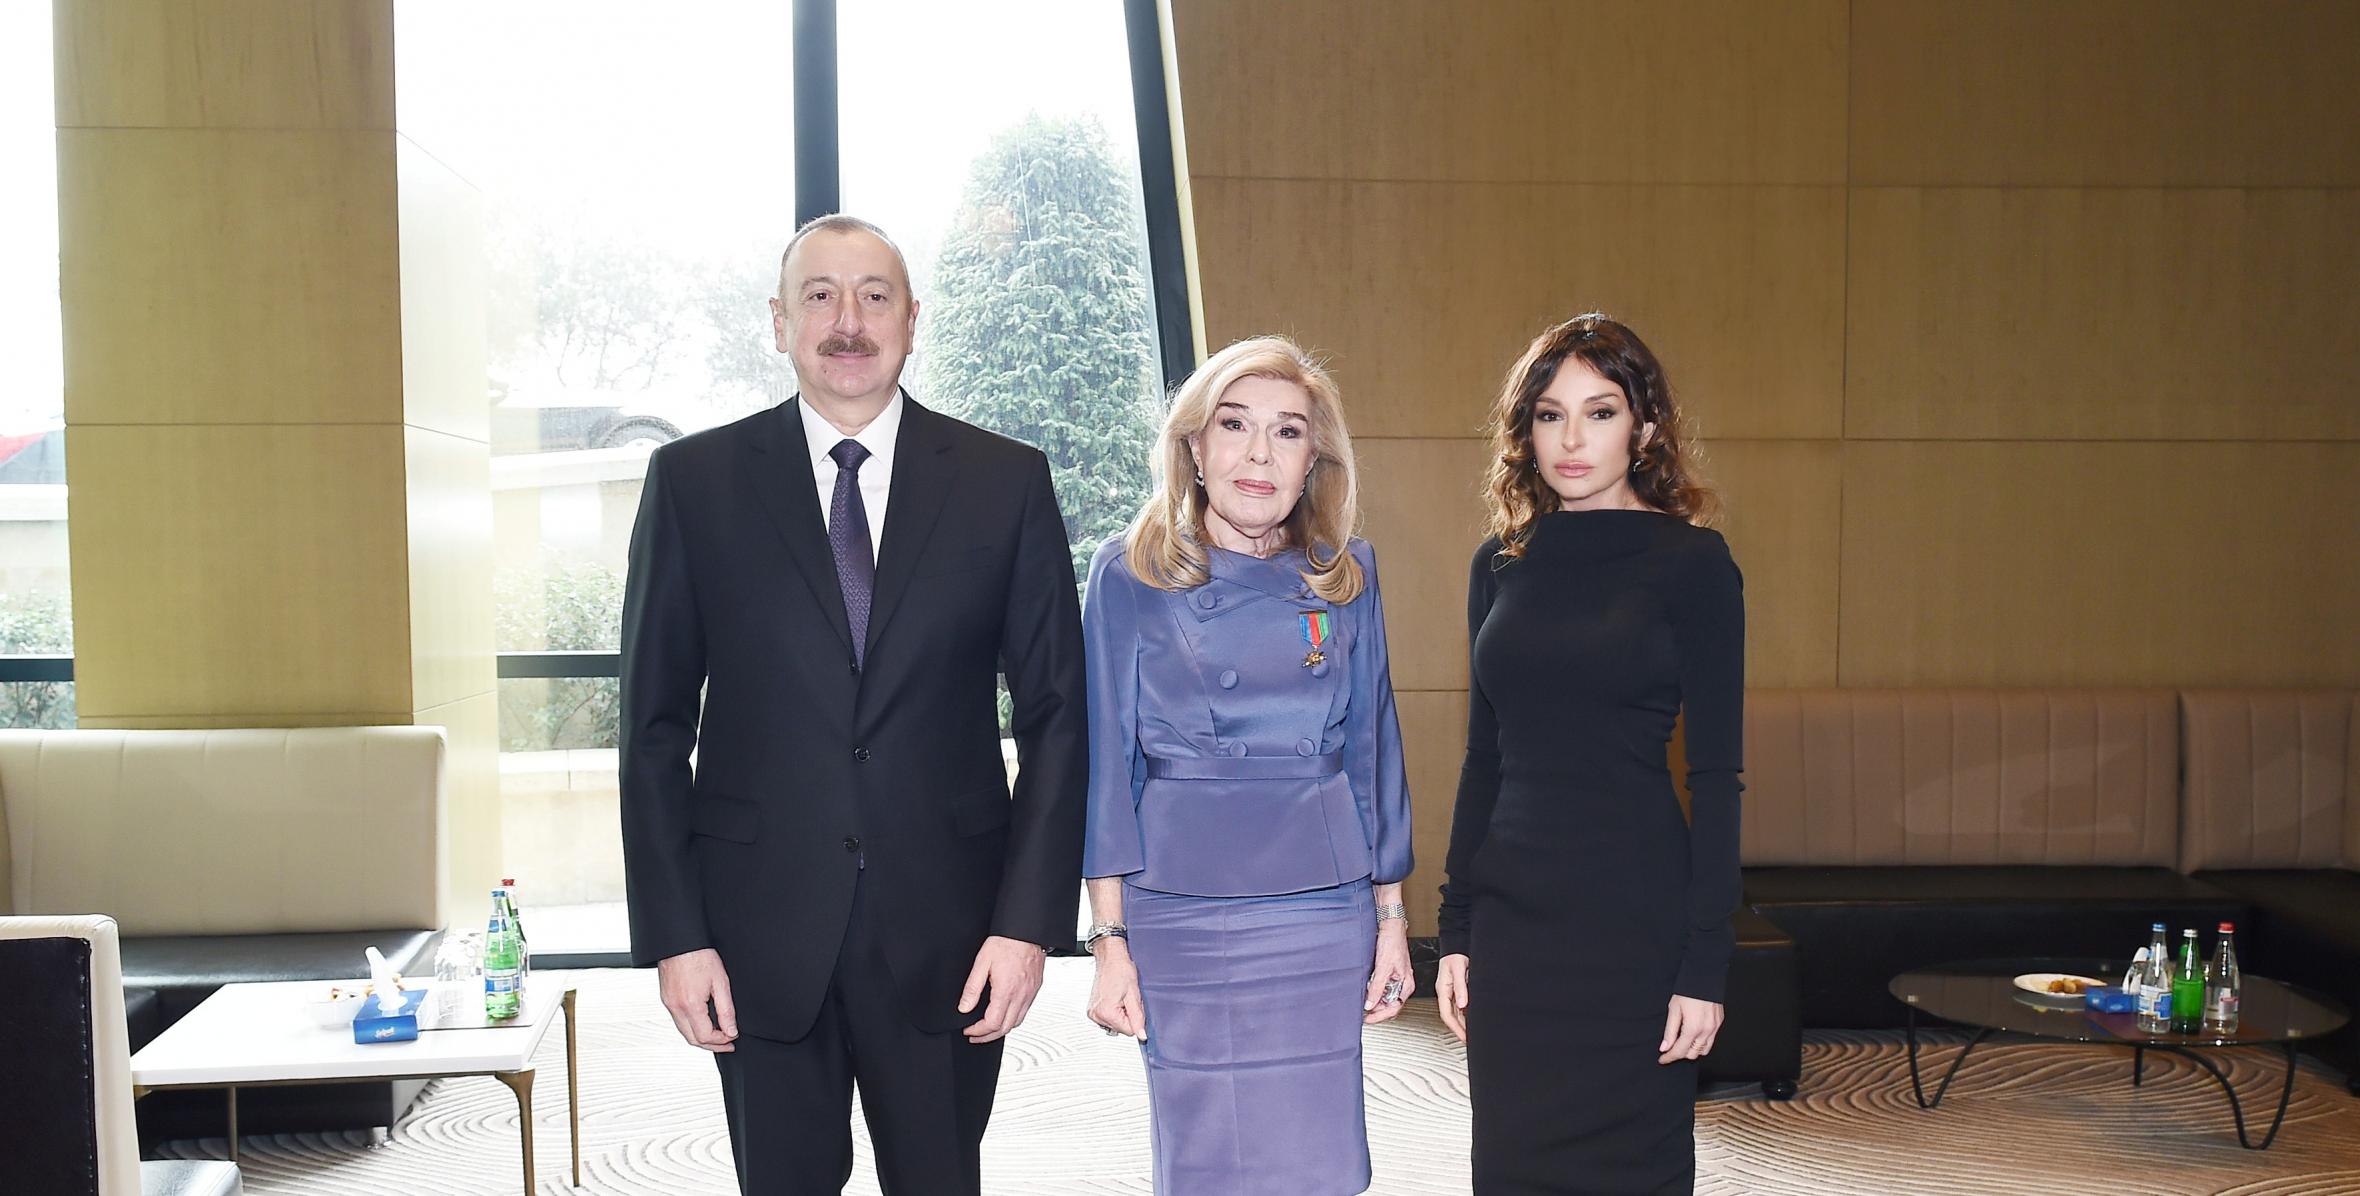 Ilham Aliyev presented “Dostlug” Order to president of ELPIDA Association and Marianna V. Vardinoyannis Foundation